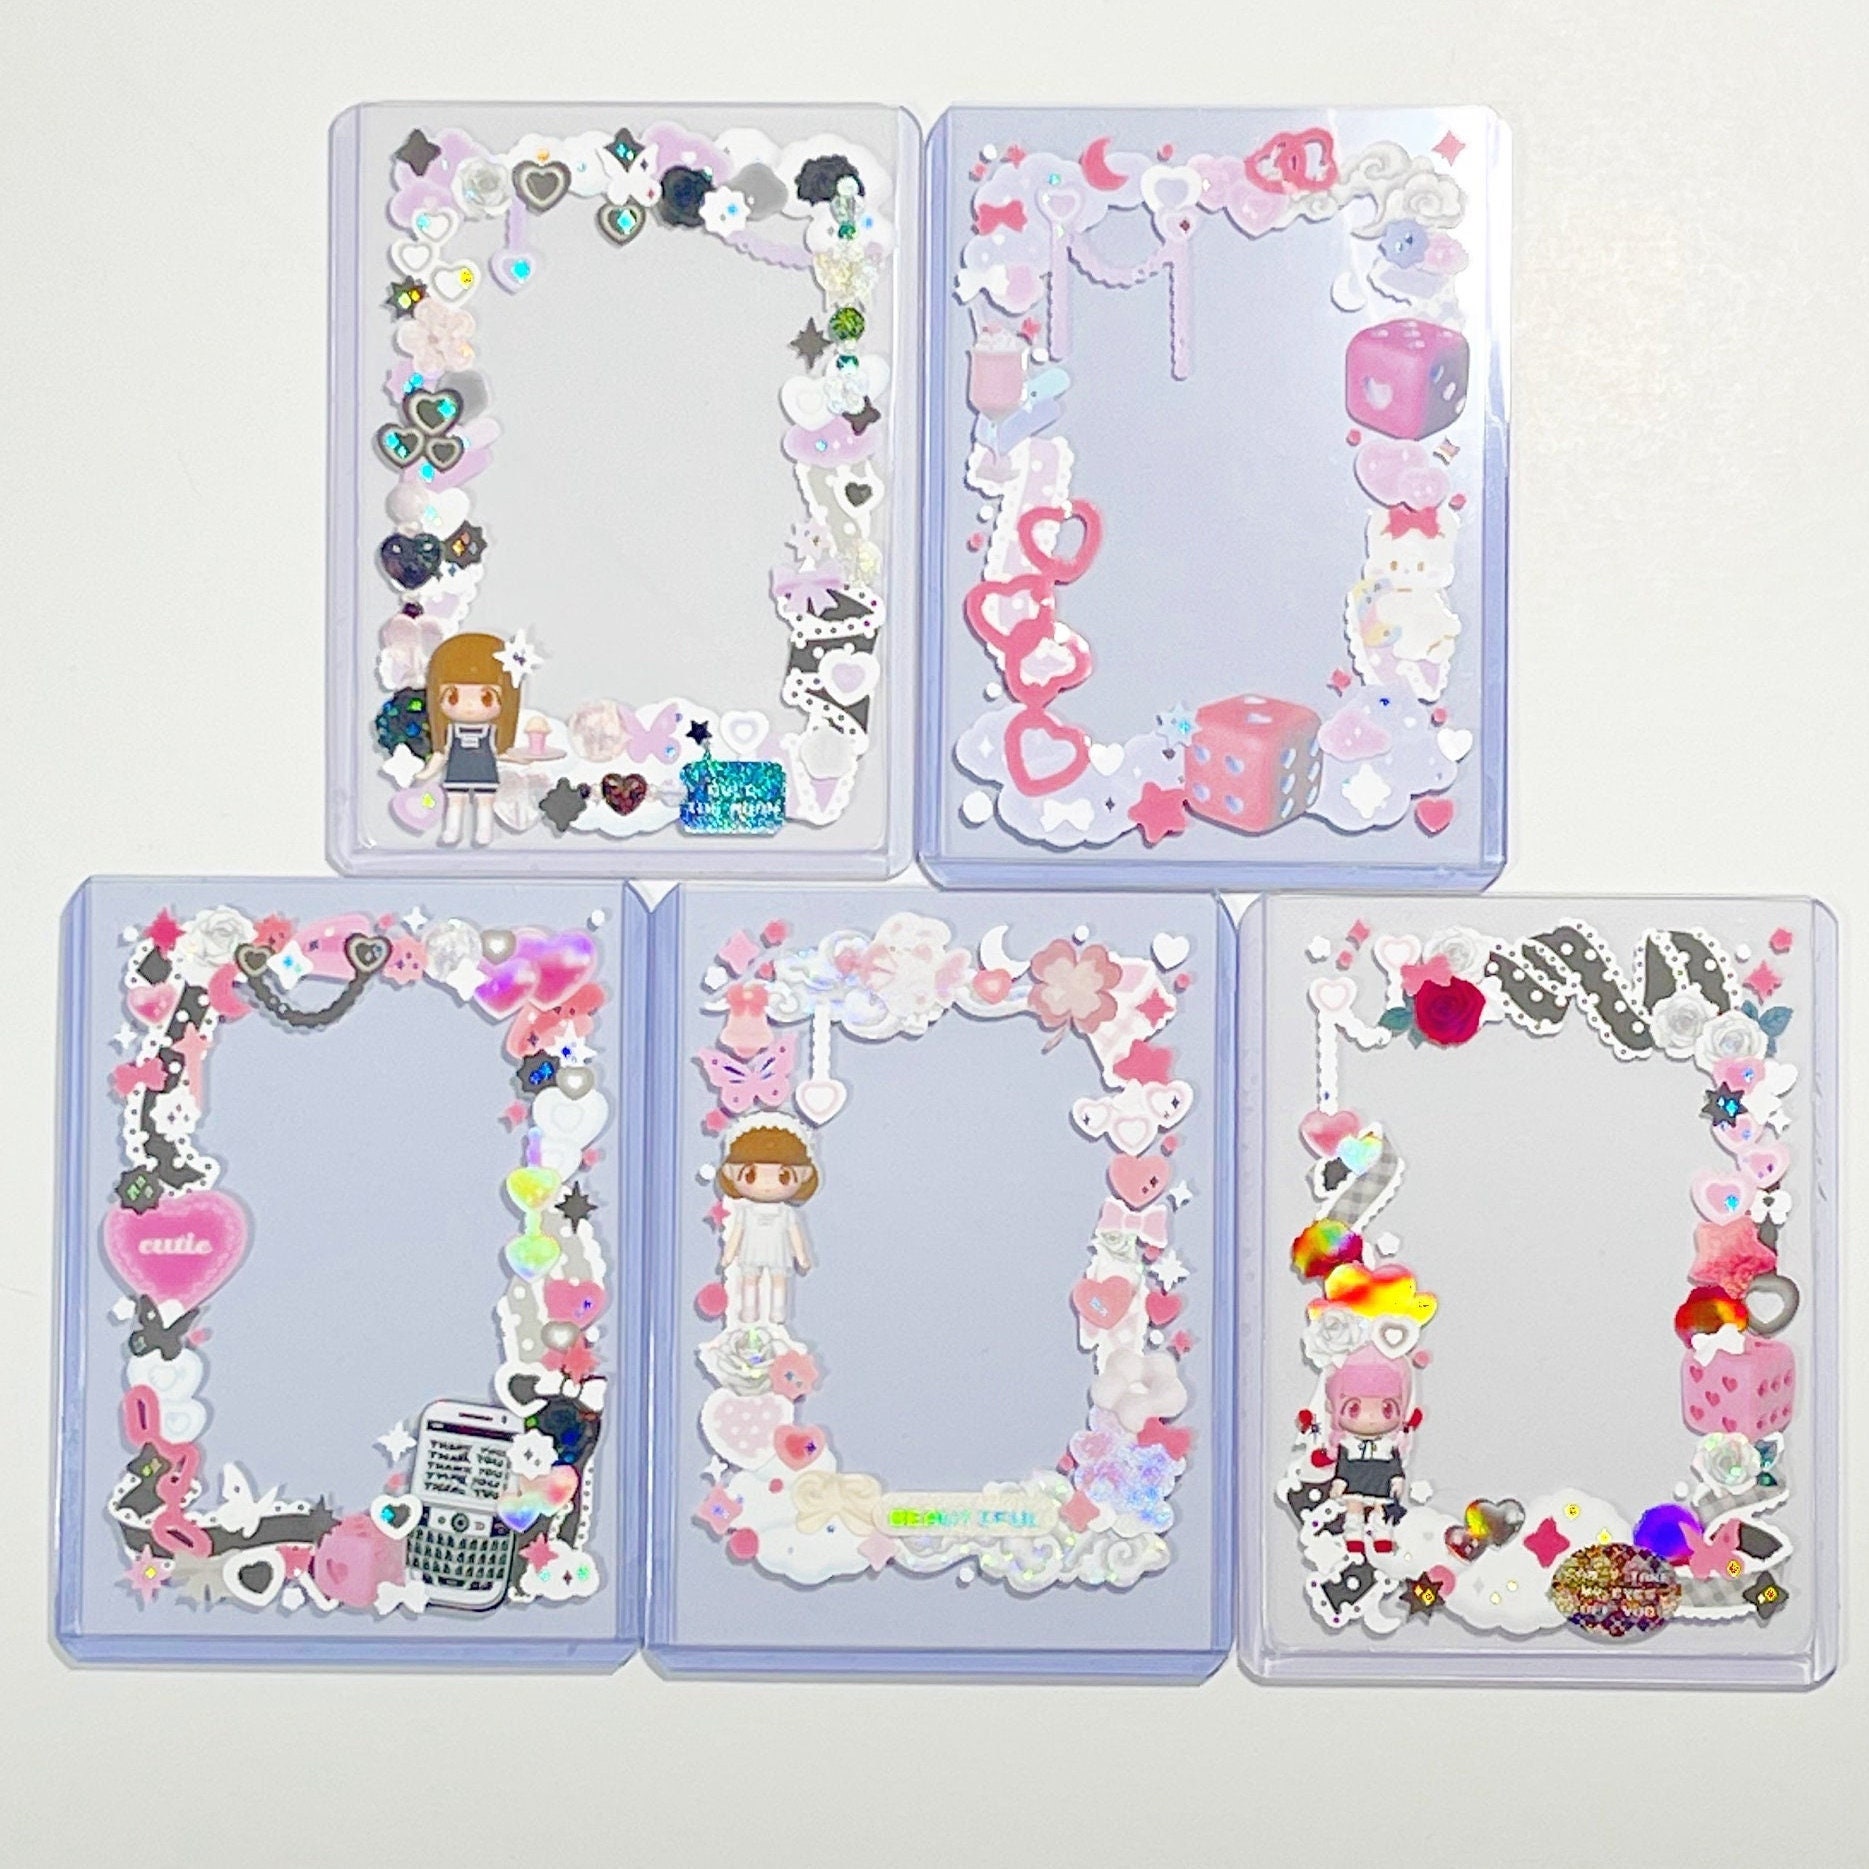 Custom Decorated Toploader, Kpop Photocard Deco, Cute Teddy Flower Toploader,  Goth Princess Toploader, Confetti Stickers Deco, Kpop PC Deco 